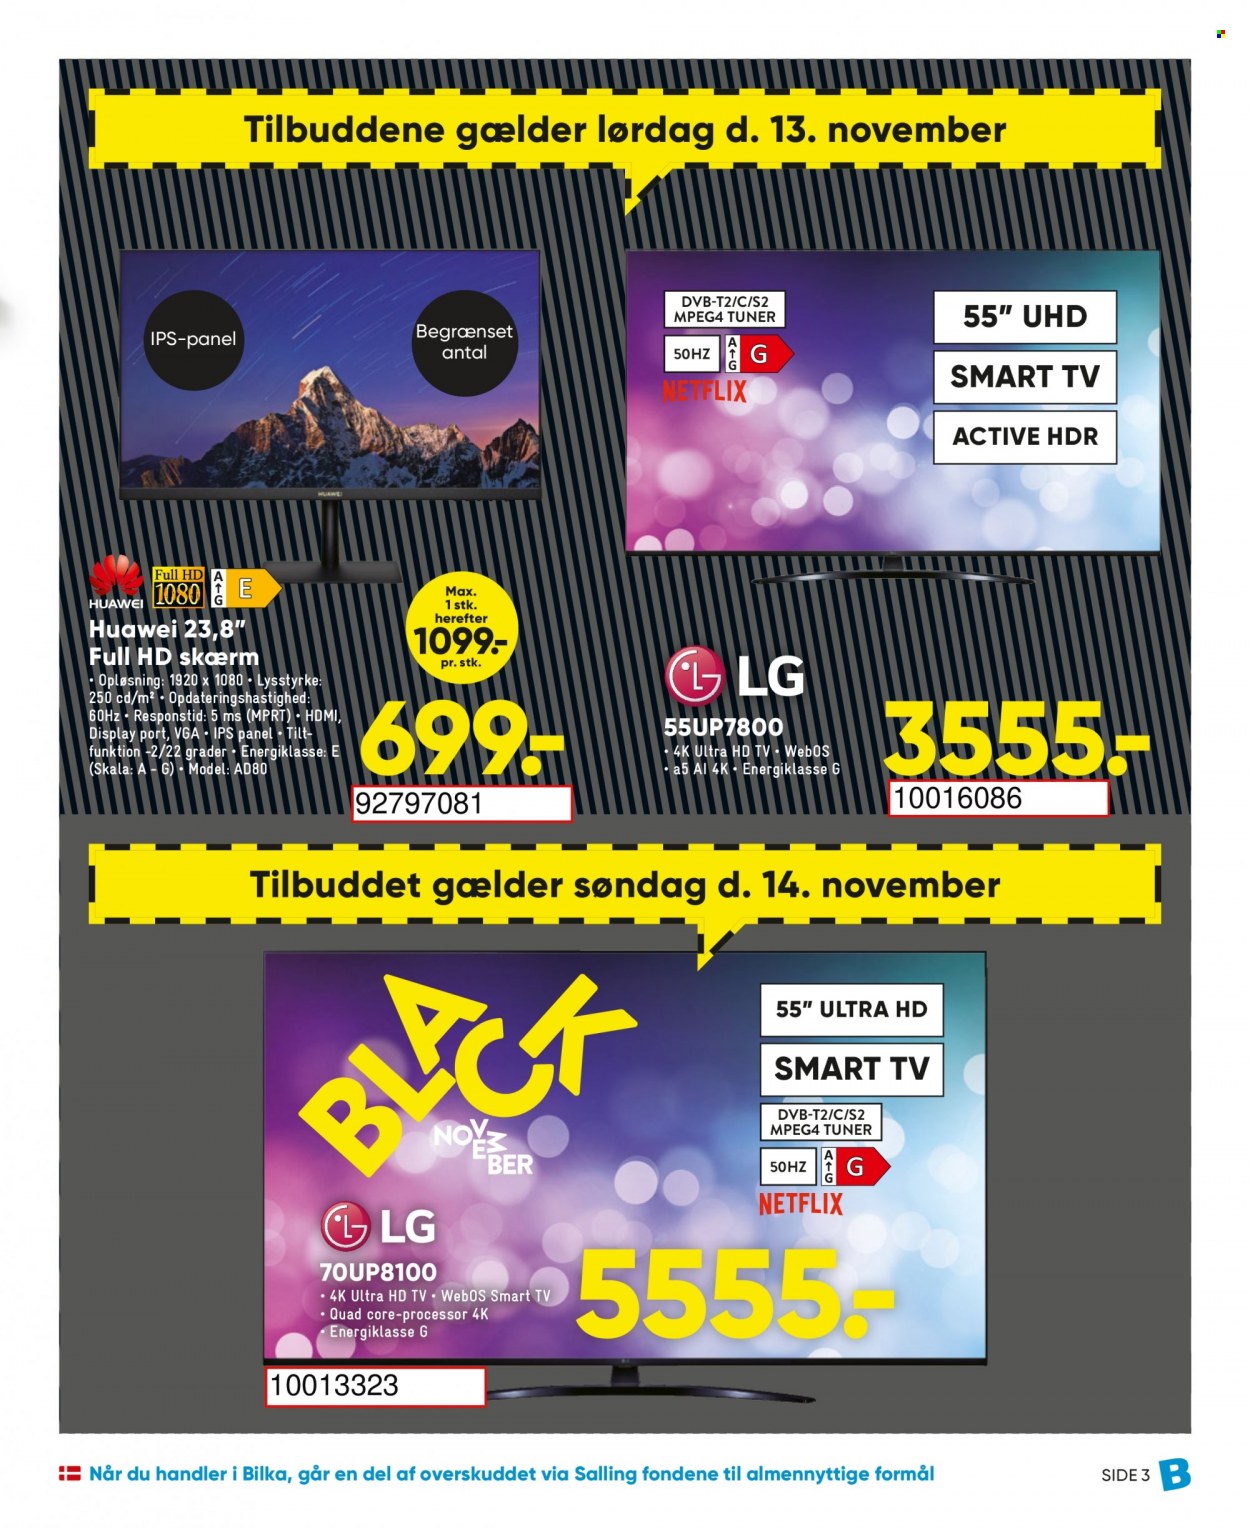 thumbnail - Bilka tilbud  - 12.11.2021 - 18.11.2021 - tilbudsprodukter - LG, Smart TV, Huawei. Side 3.